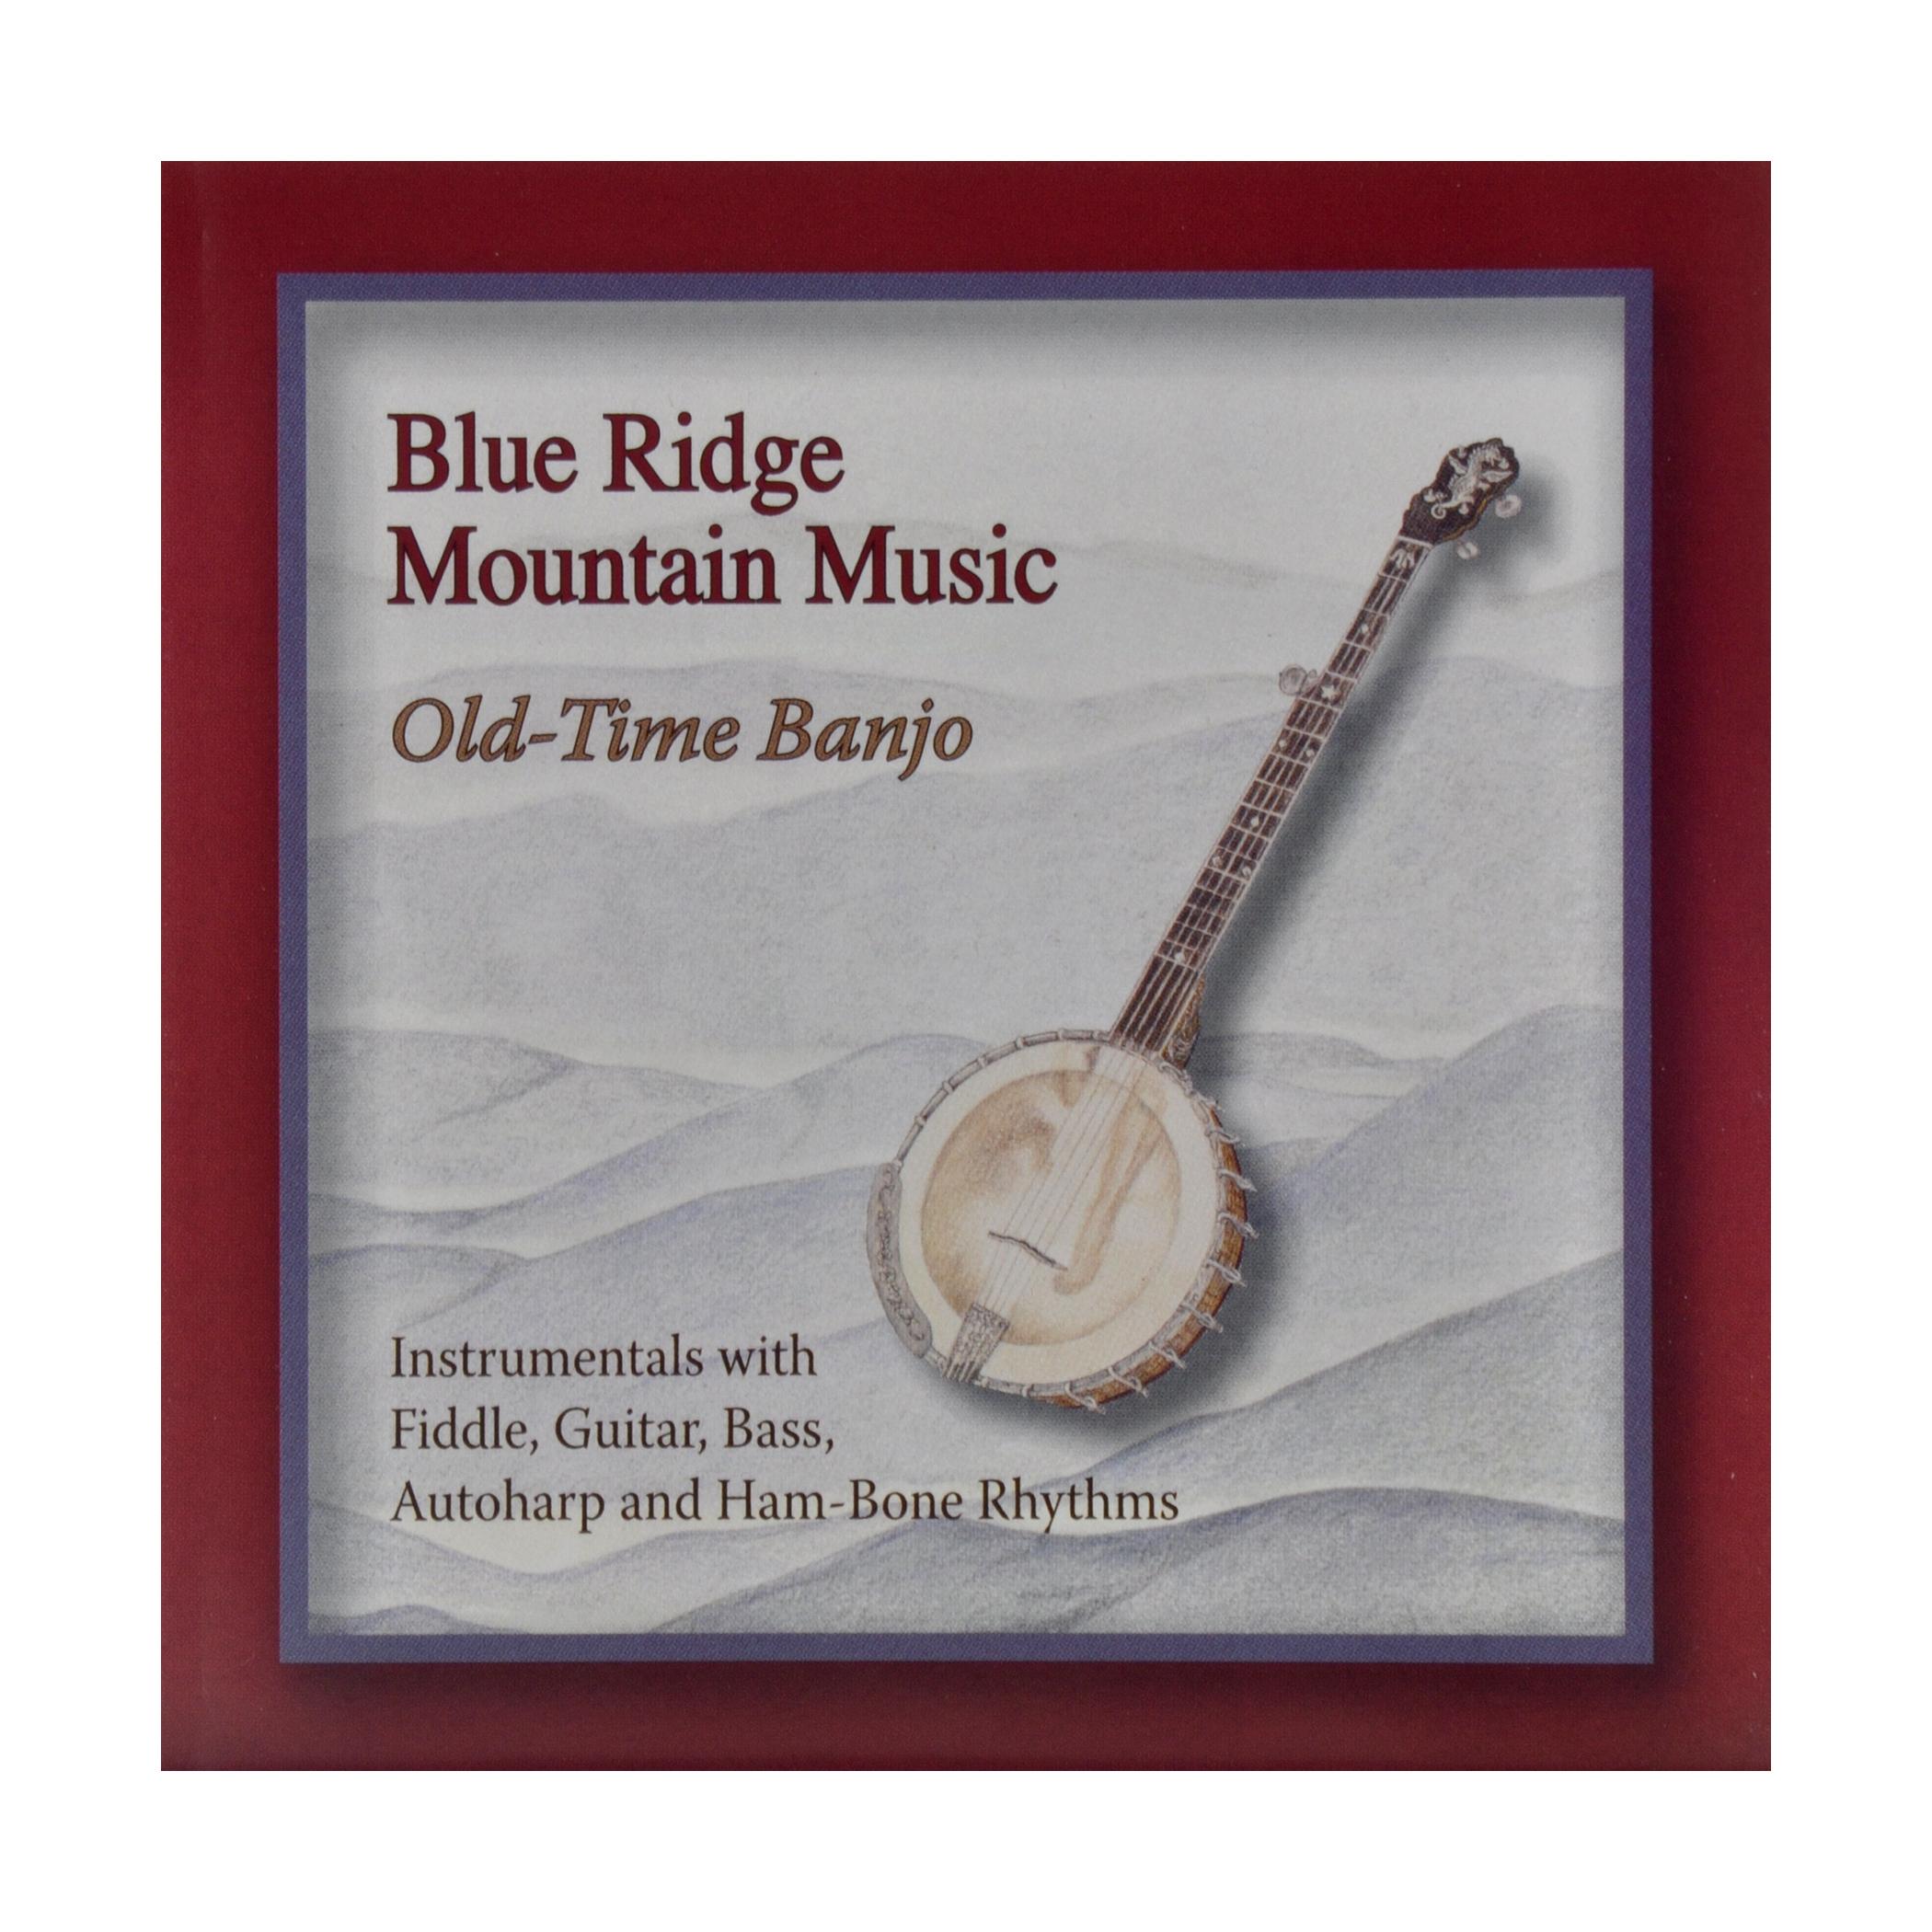  Blue Ridge Mountain Music Cd